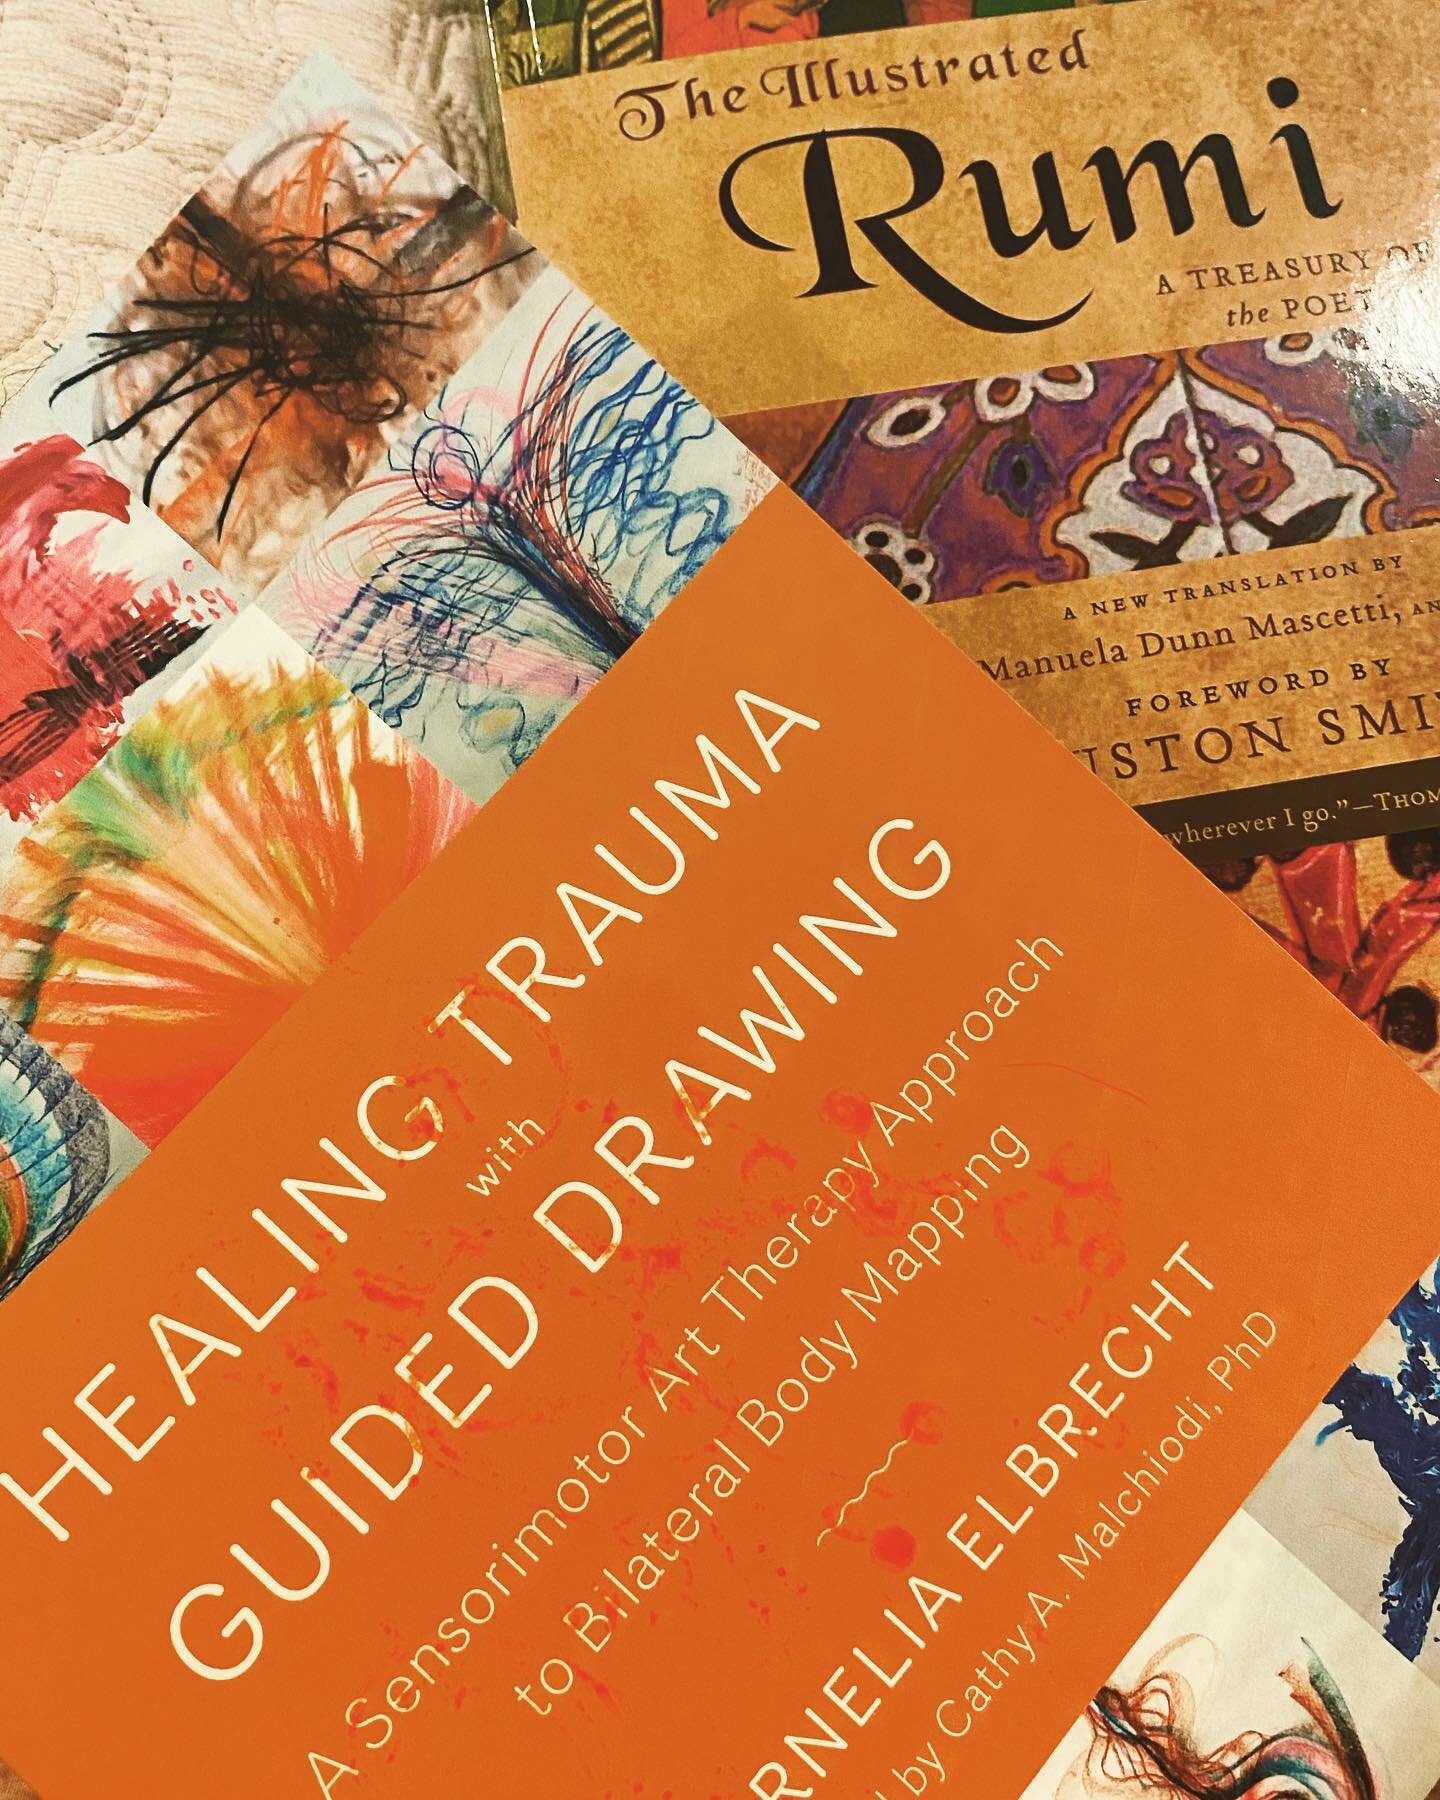 The two books on my bedside table #trauma #arttherapyheals #rumi #artist #mentalhealthawareness